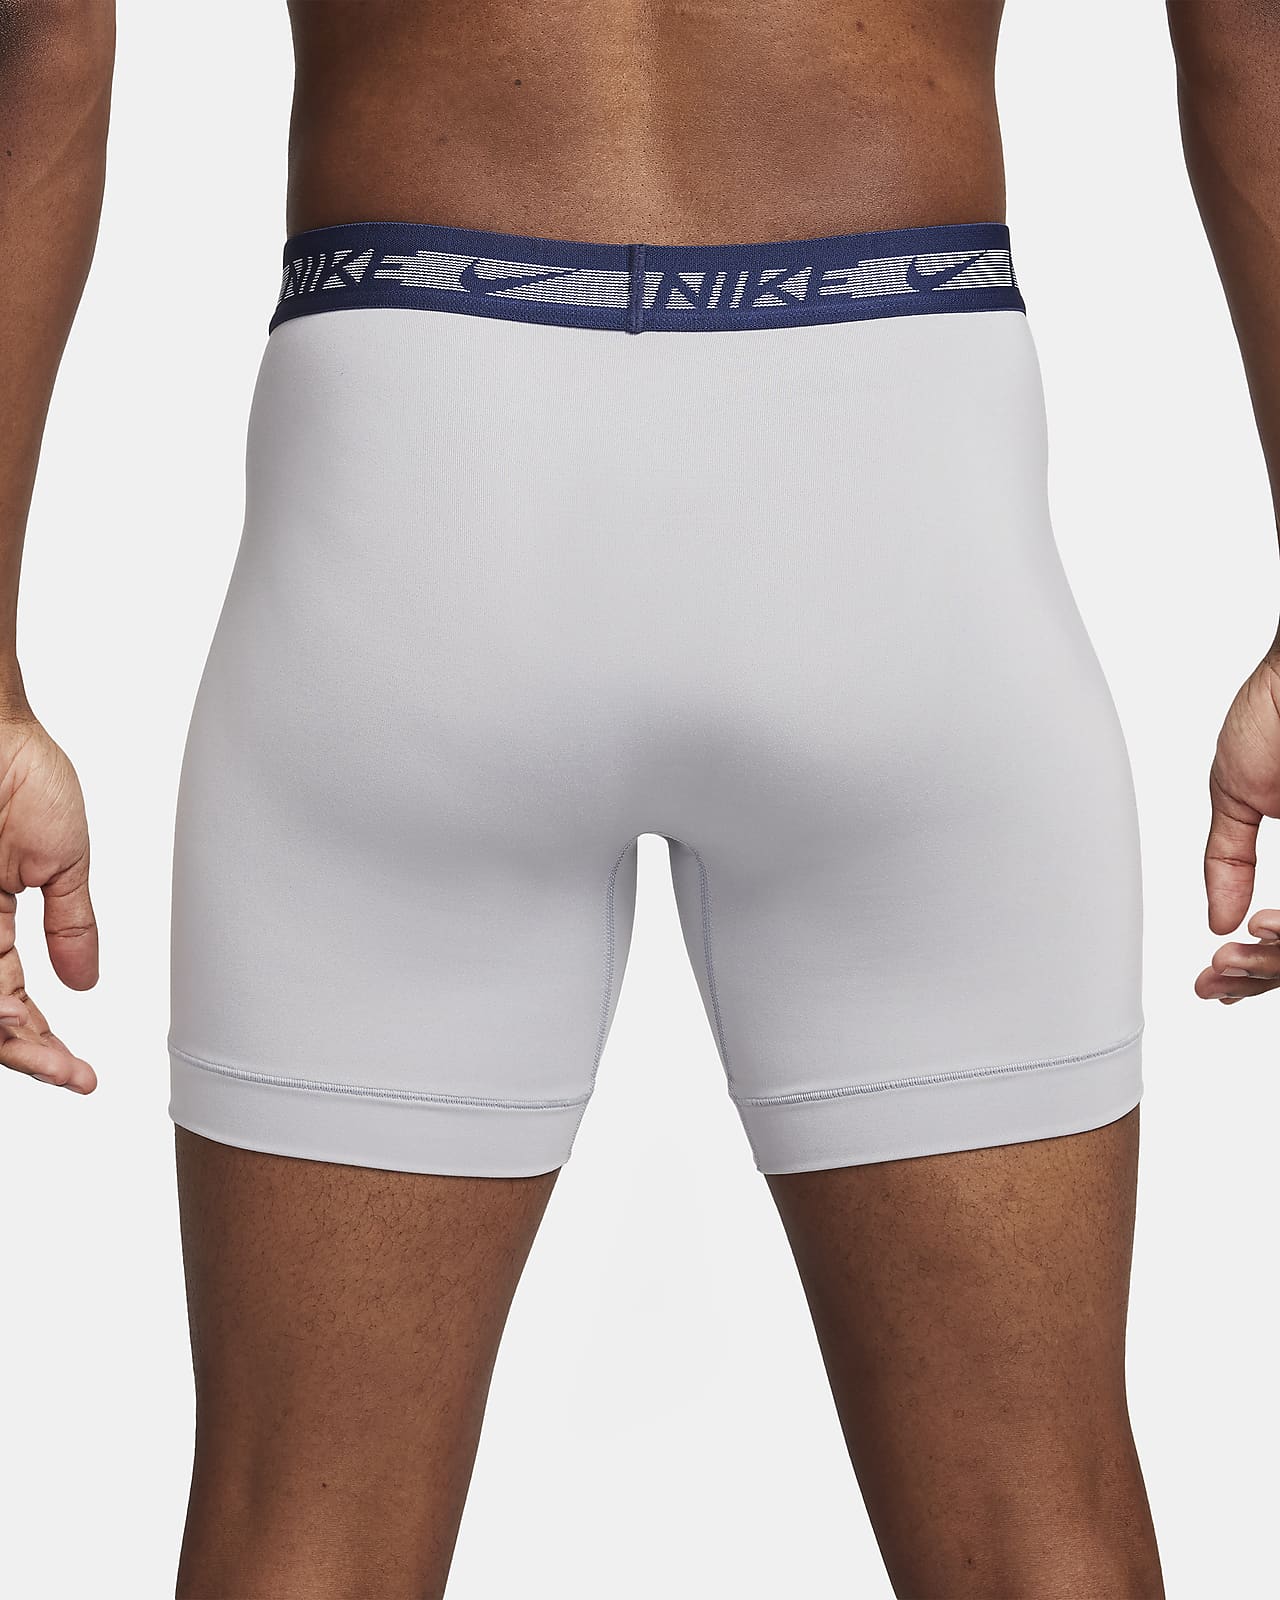 Nike Underwear 3 PACK - Pants - bordeaux/navy/charcoal heather